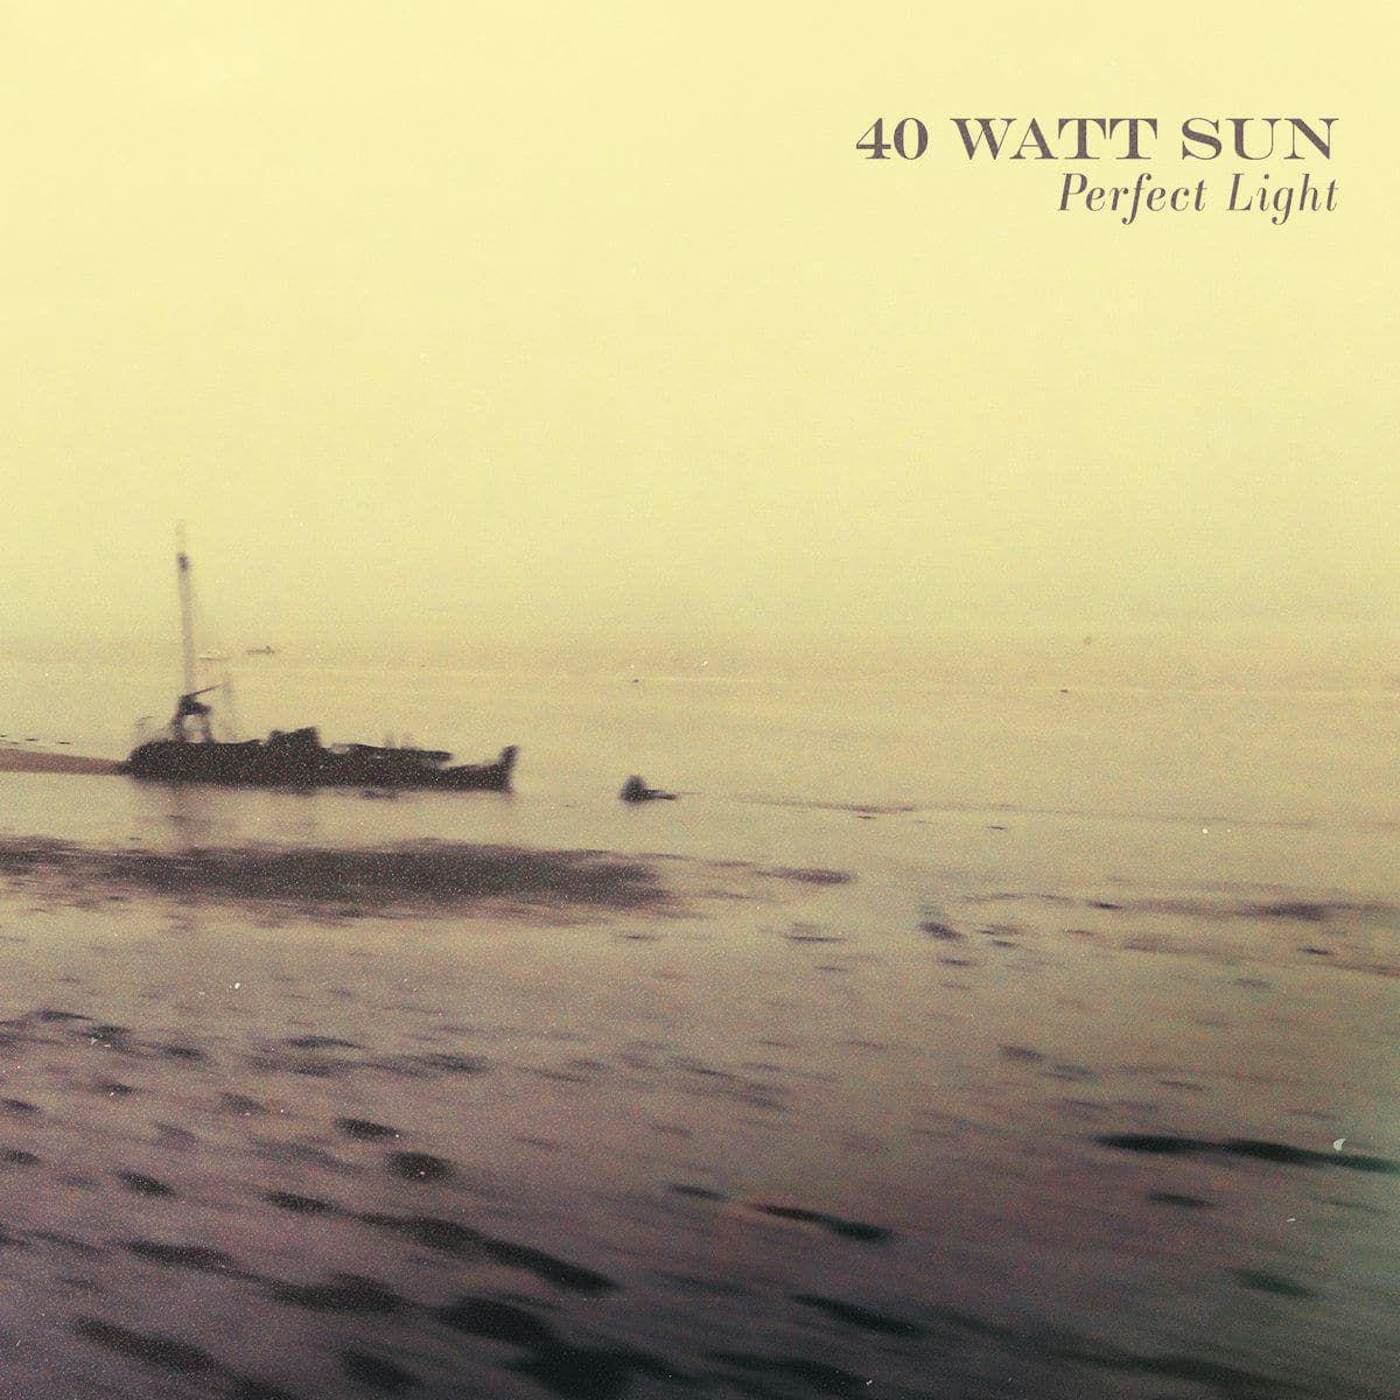 40 Watt Sun Perfect Light Vinyl Record